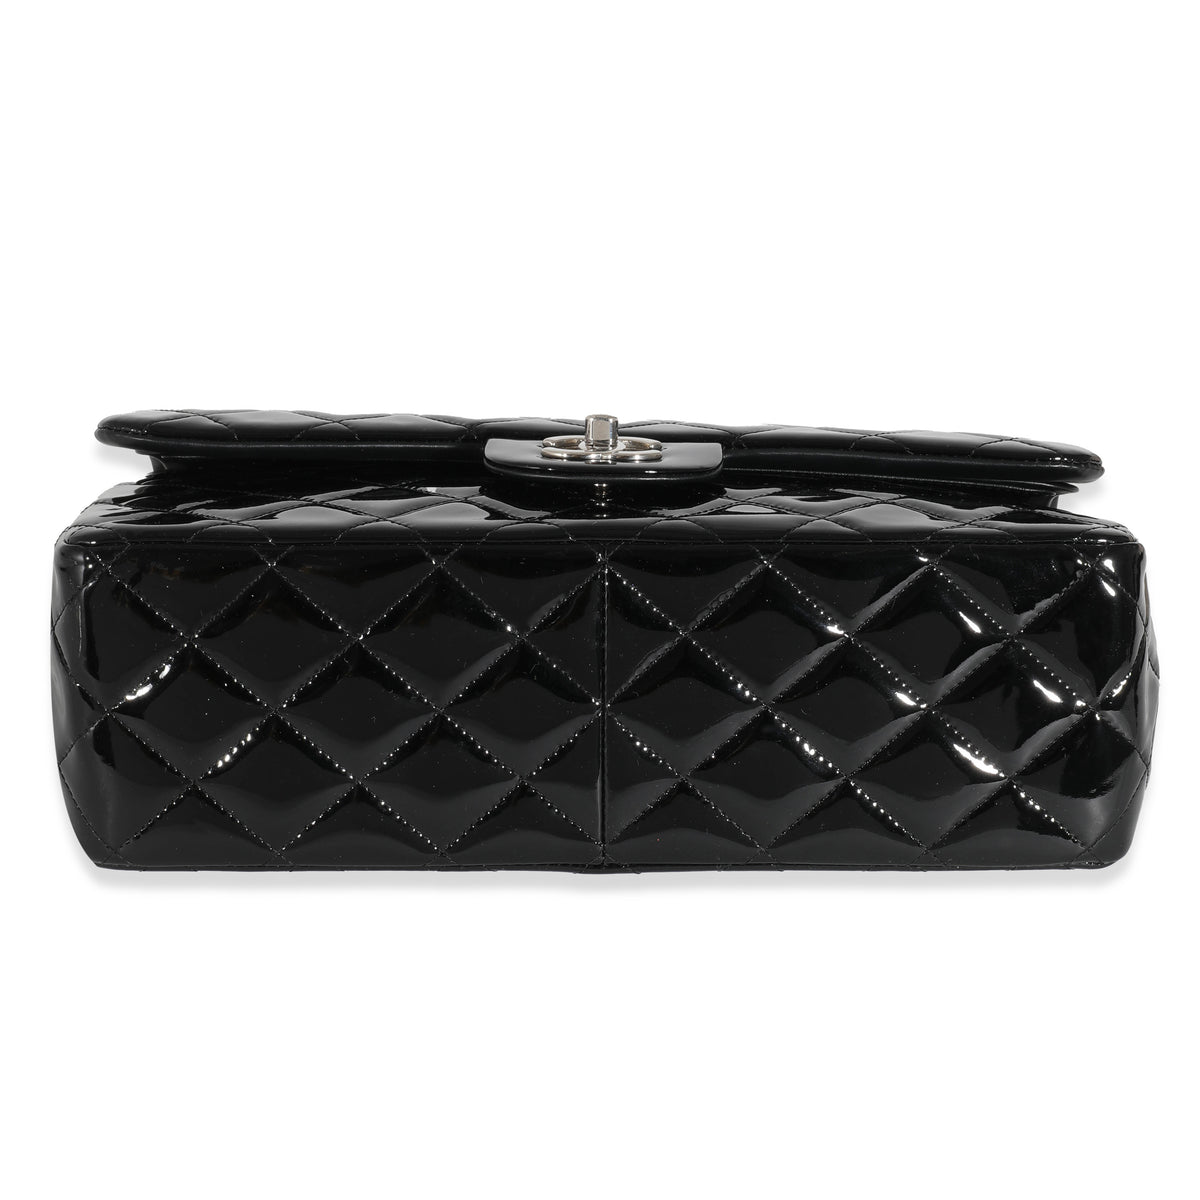 Chanel Black Patent Classic Jumbo Flap Bag